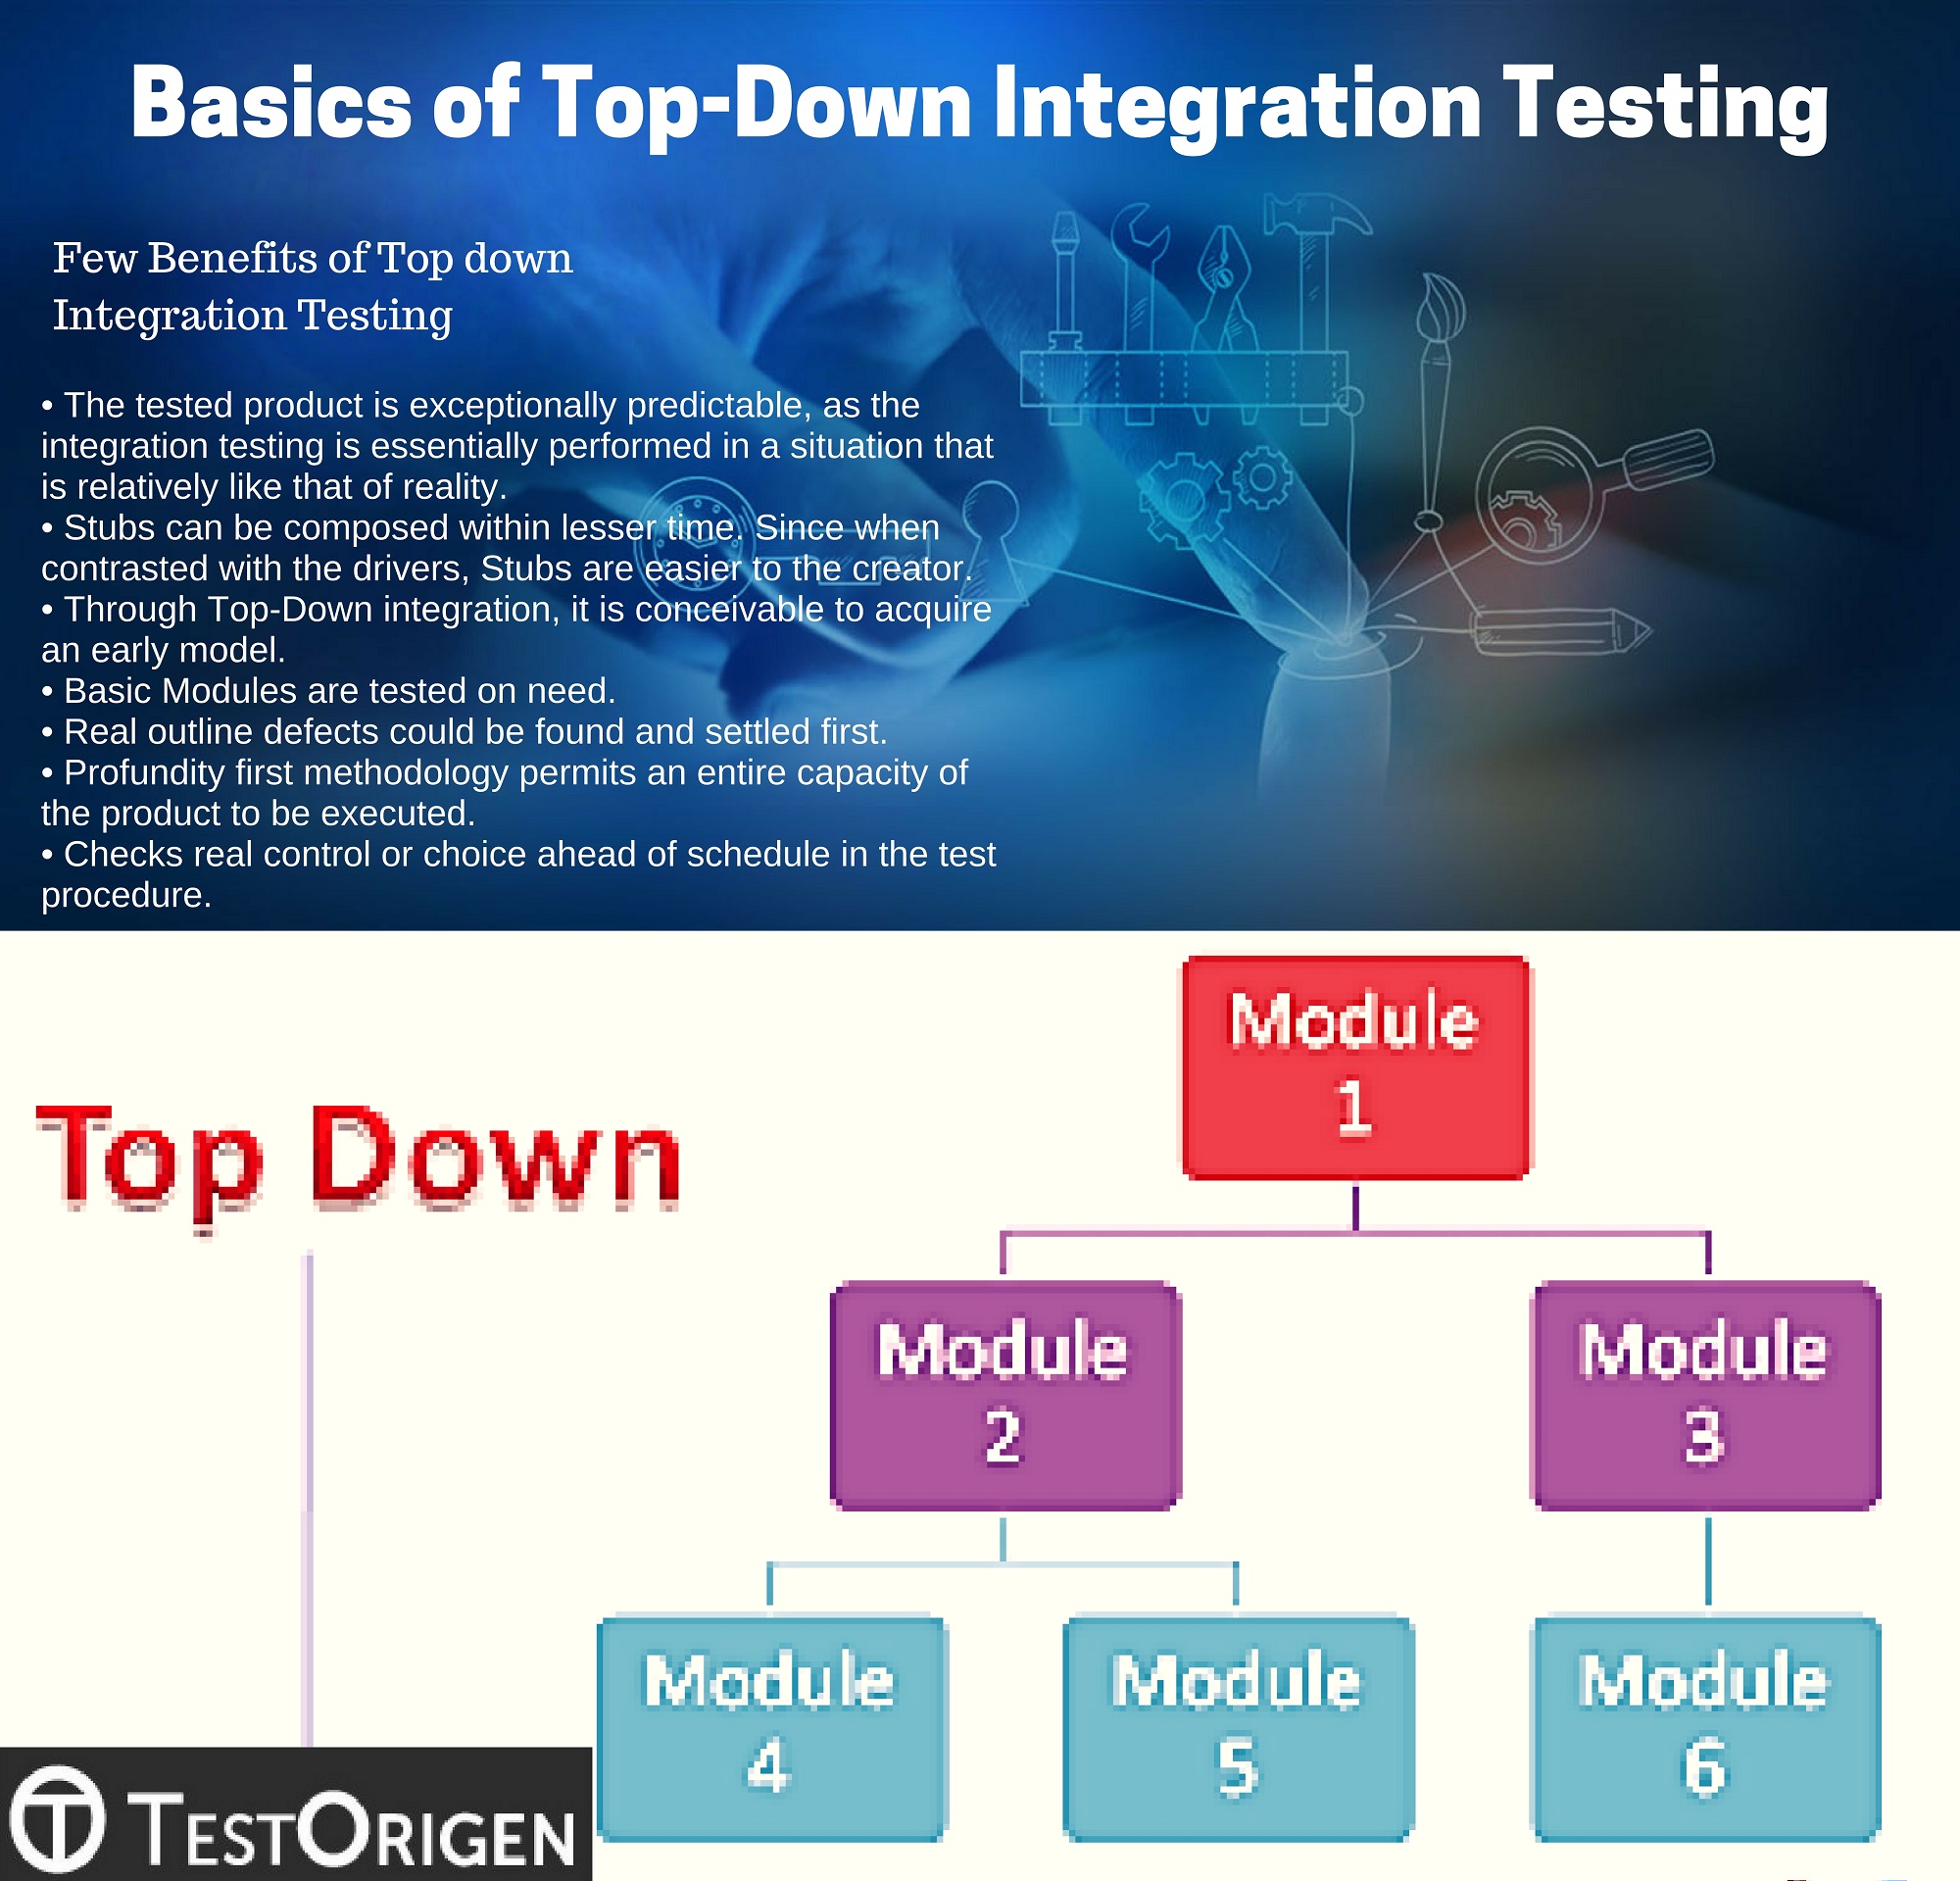 Basics of Top-Down Integration Testing